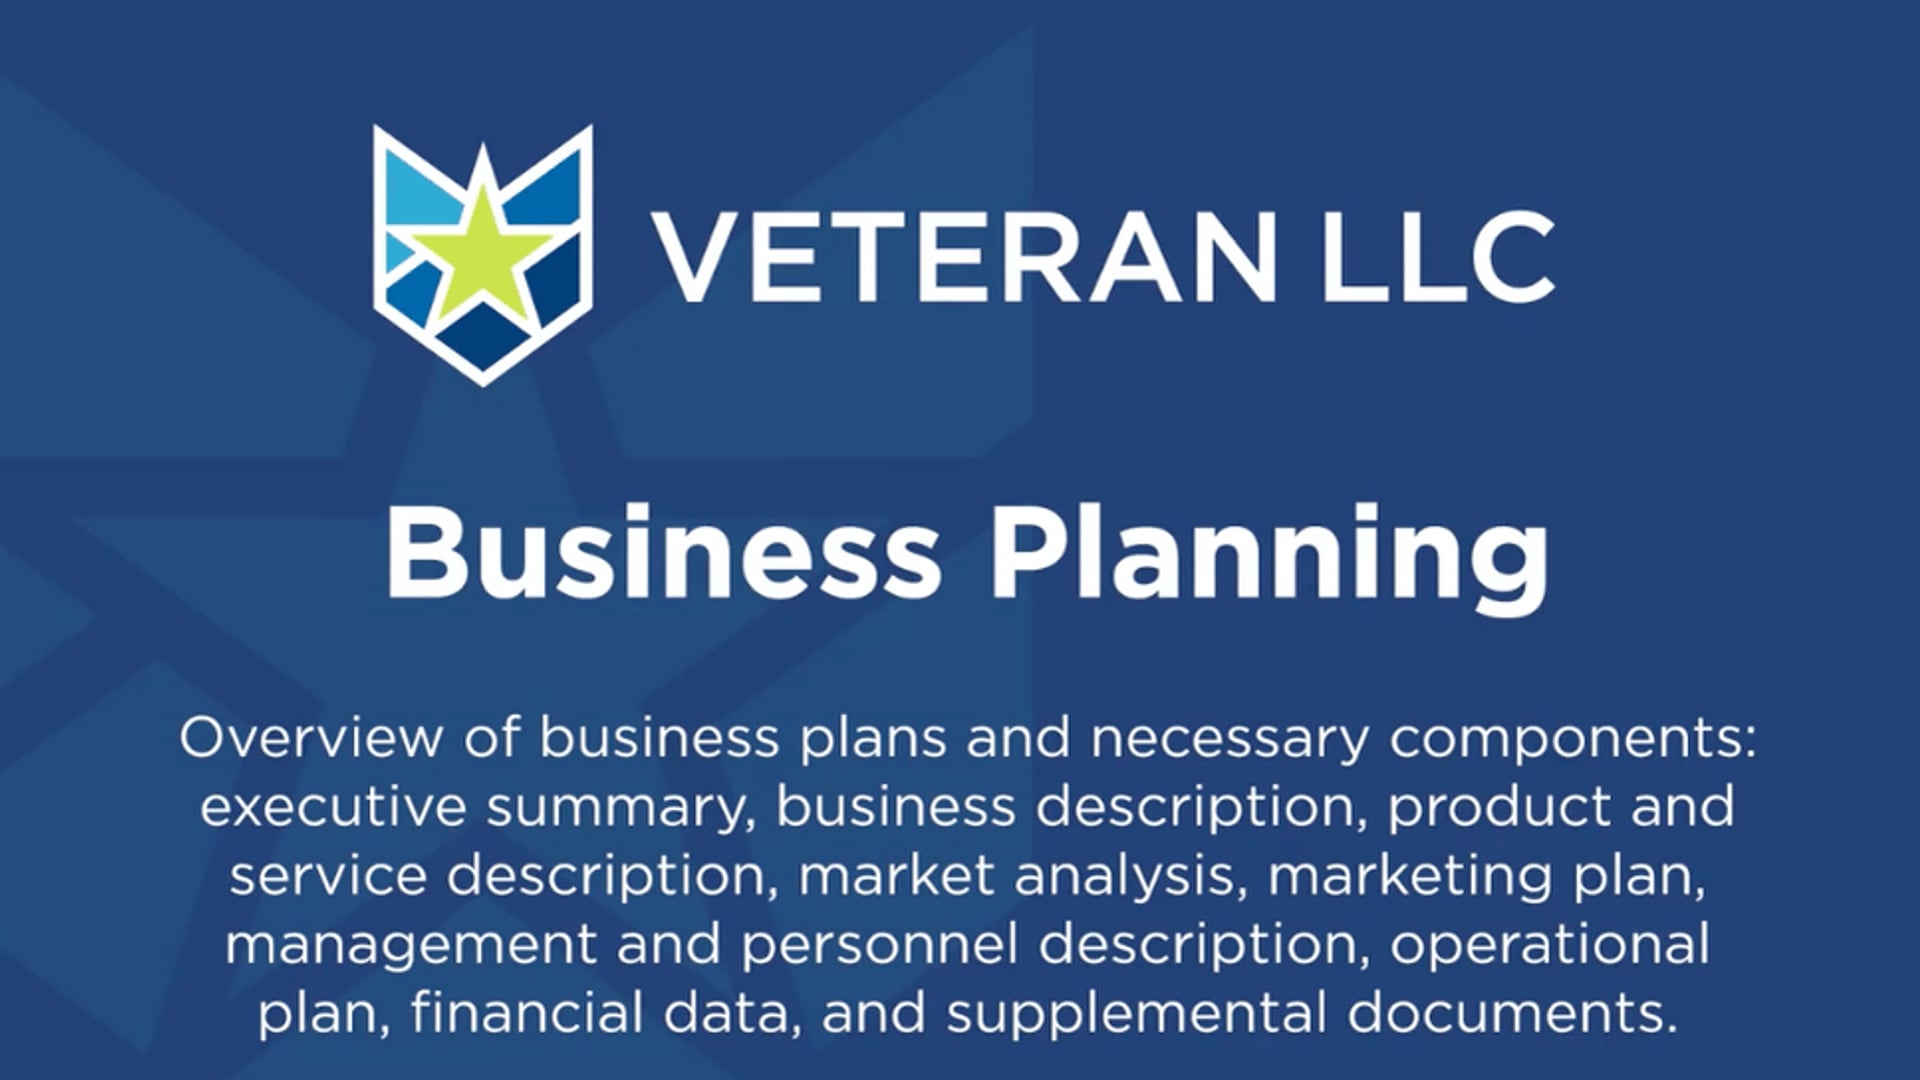 Veteran LLC - Business Planning